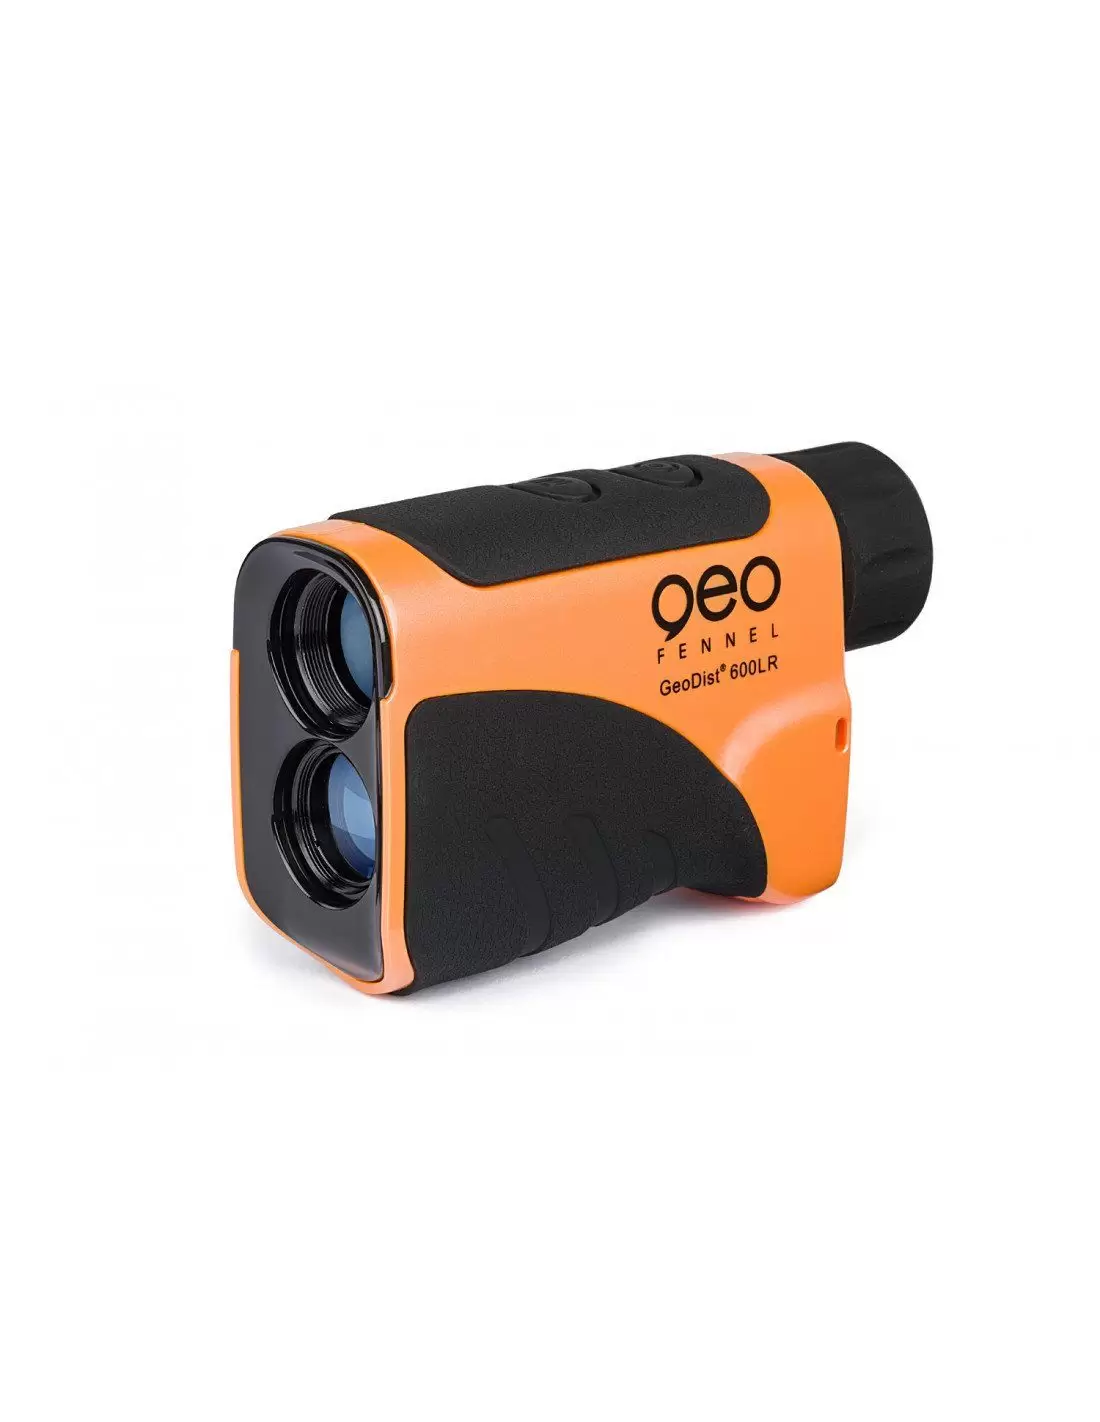 Télémètre laser Geotape 2 en 1 avec ruban intégré - GEO Fennel - 300710